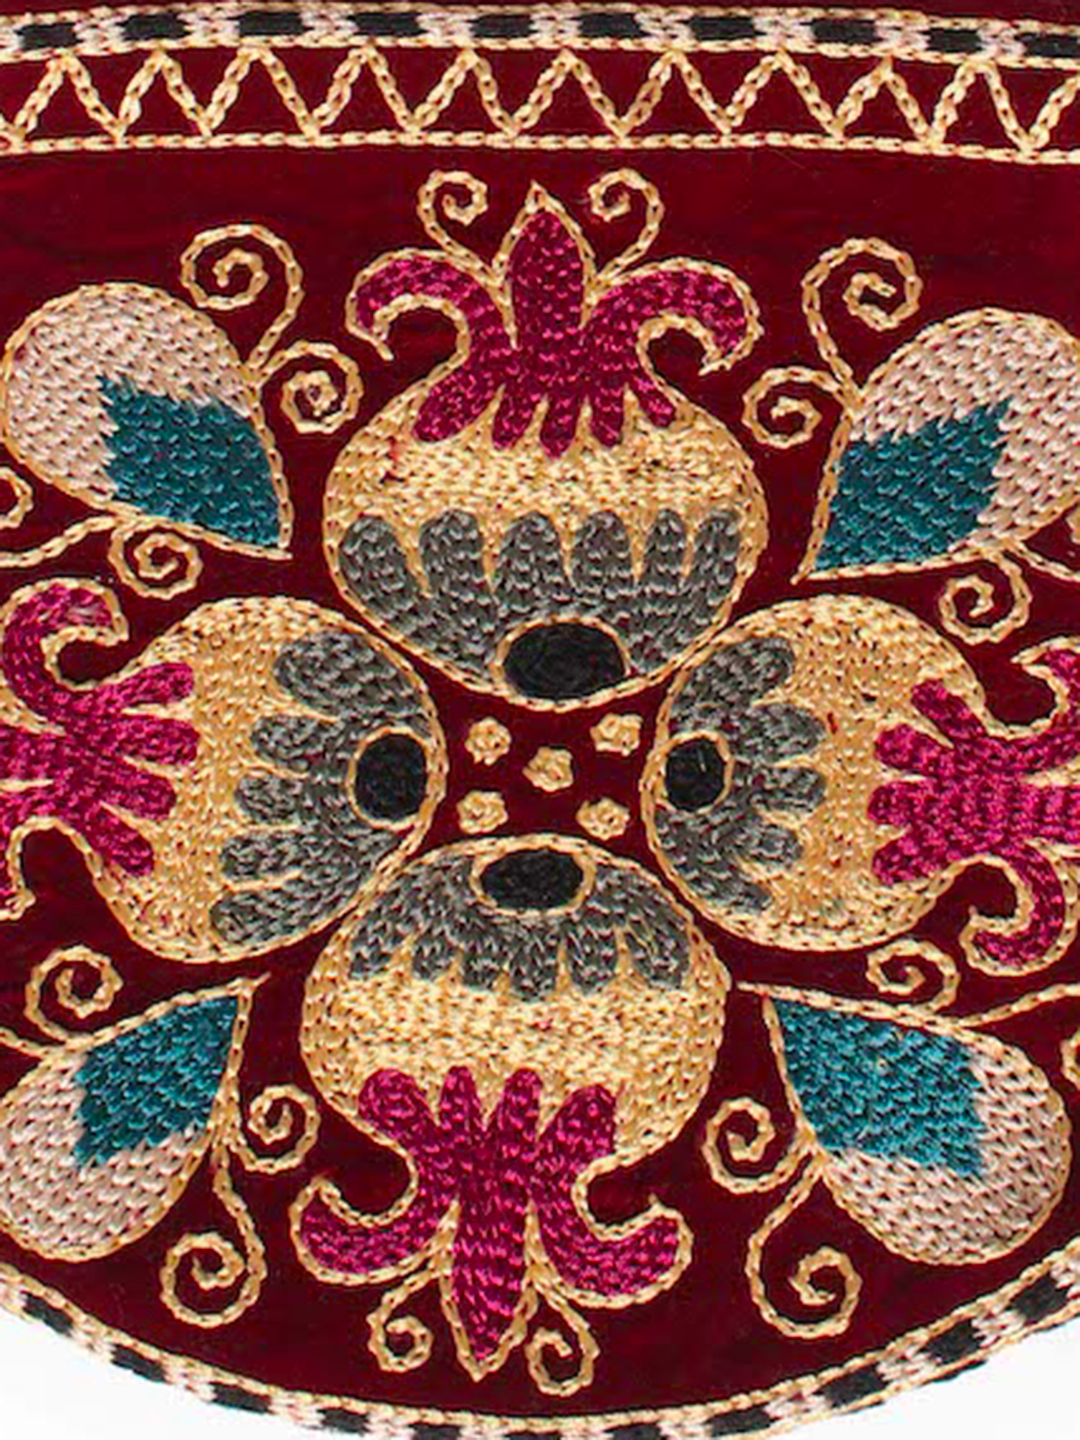 UZBEKISTAN - LAKAI Silk embroidery bag